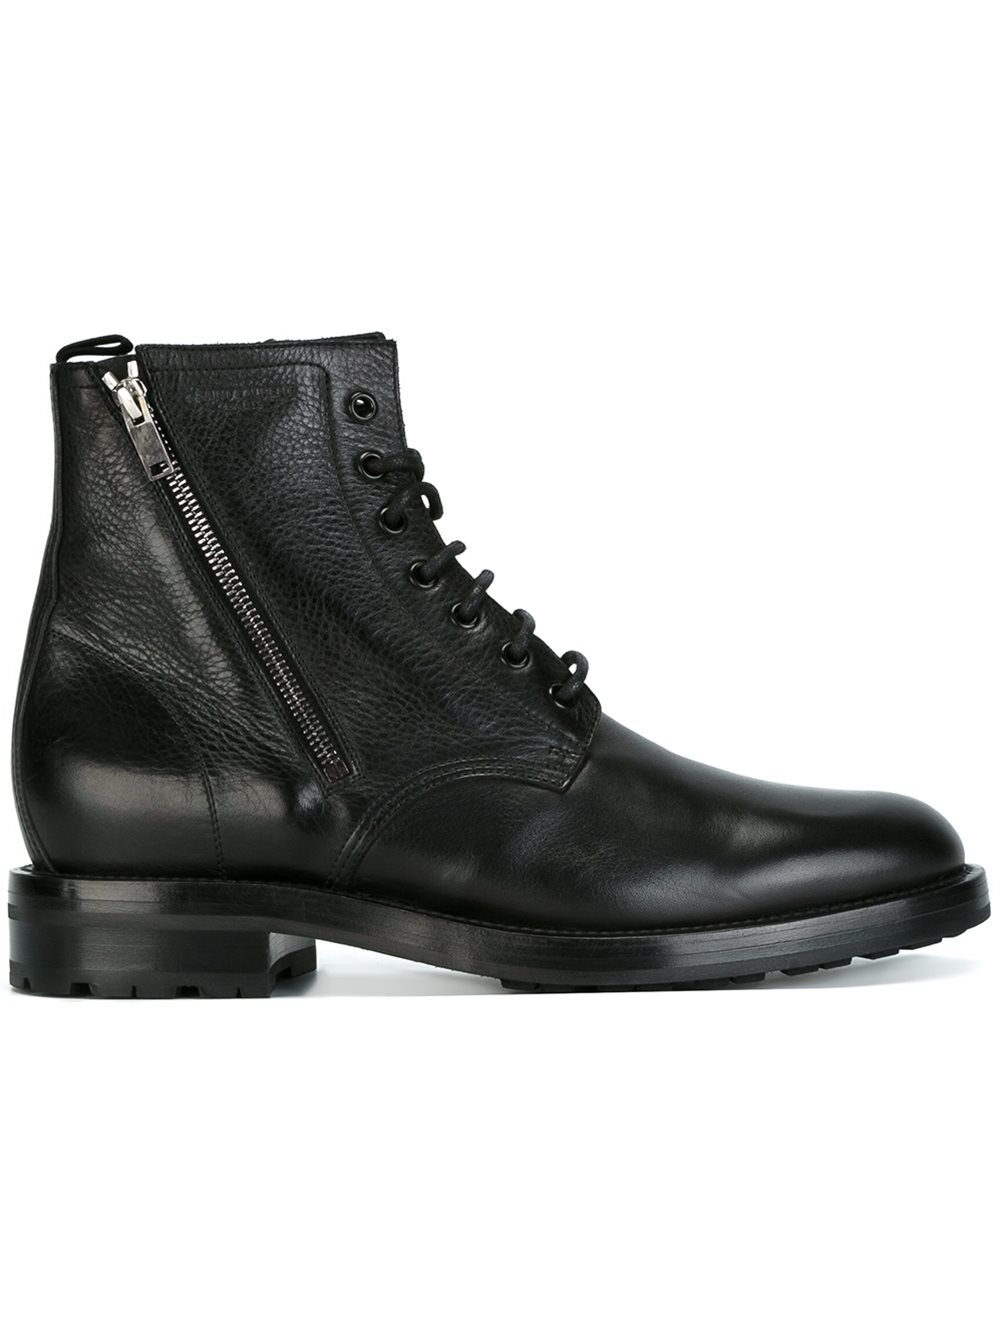 Saint laurent Classic Military Boots in Black for Men | Lyst